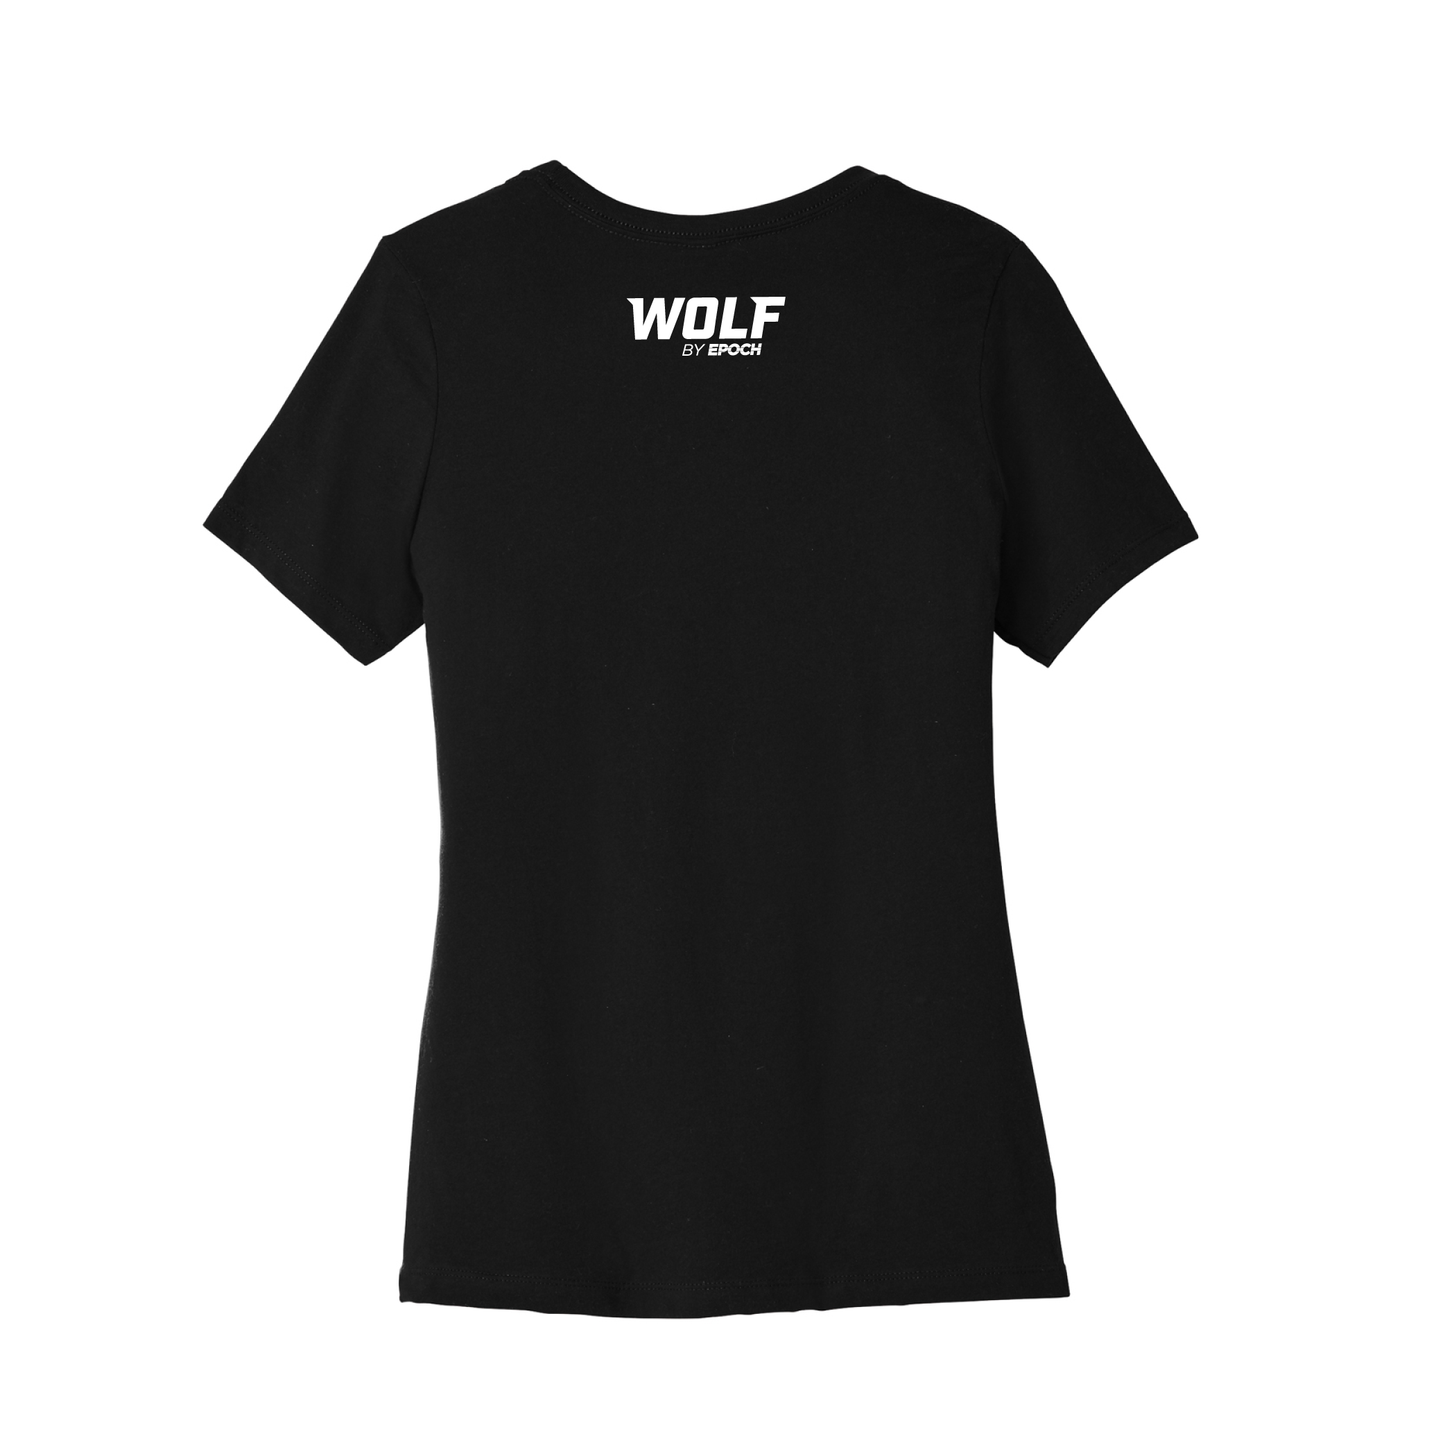 Wolf Athletics - Women's Short Sleeve Tee Black